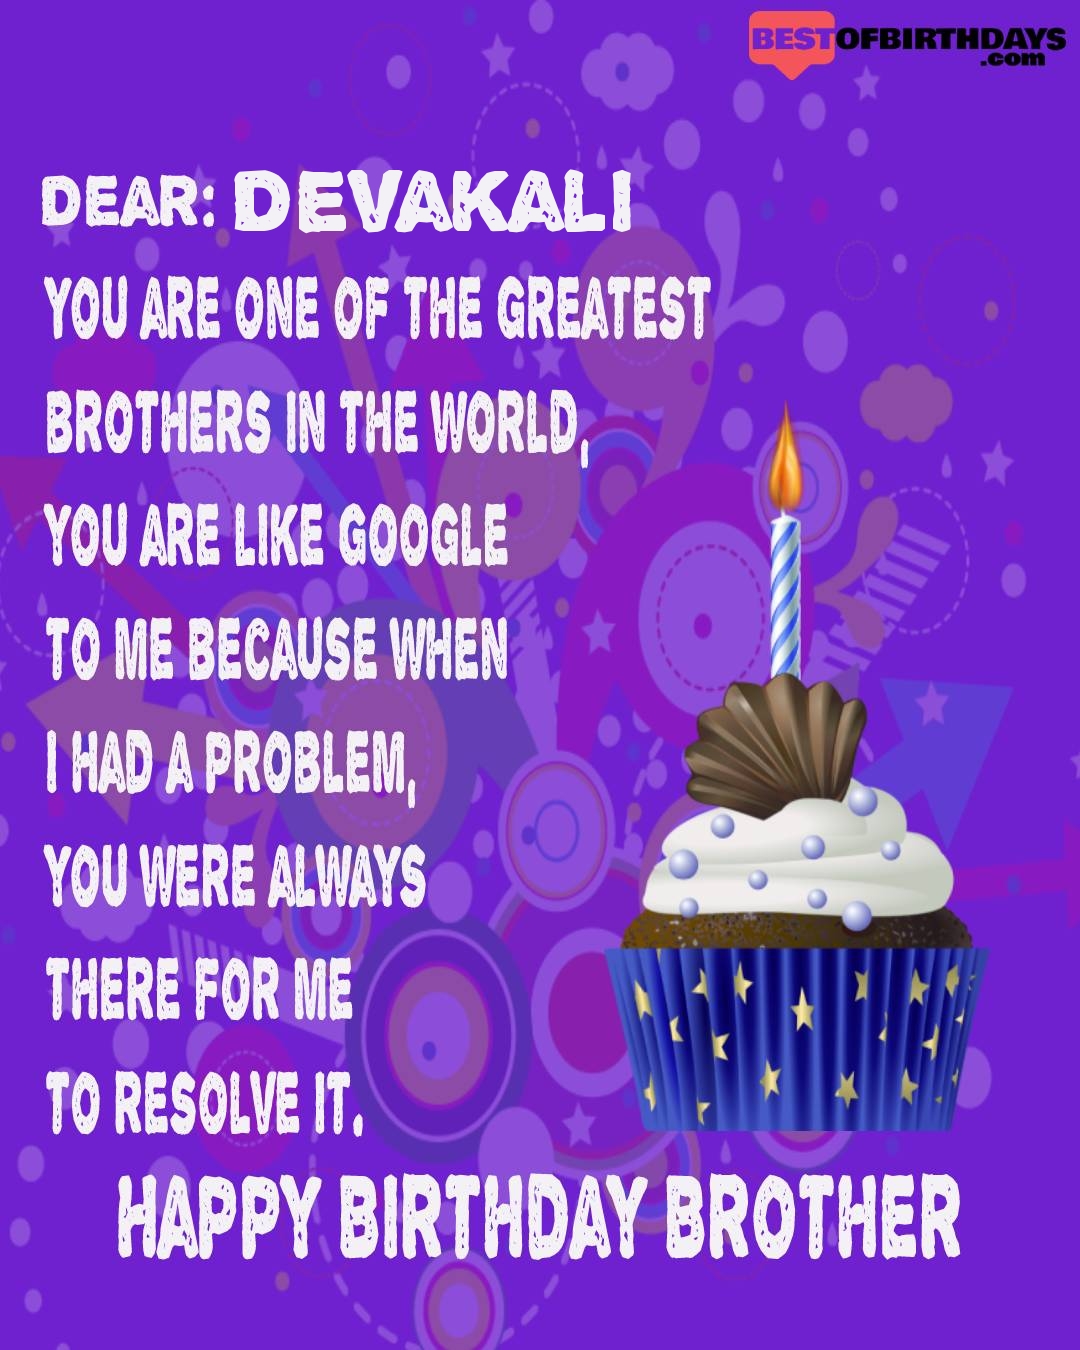 Happy birthday devakali bhai brother bro